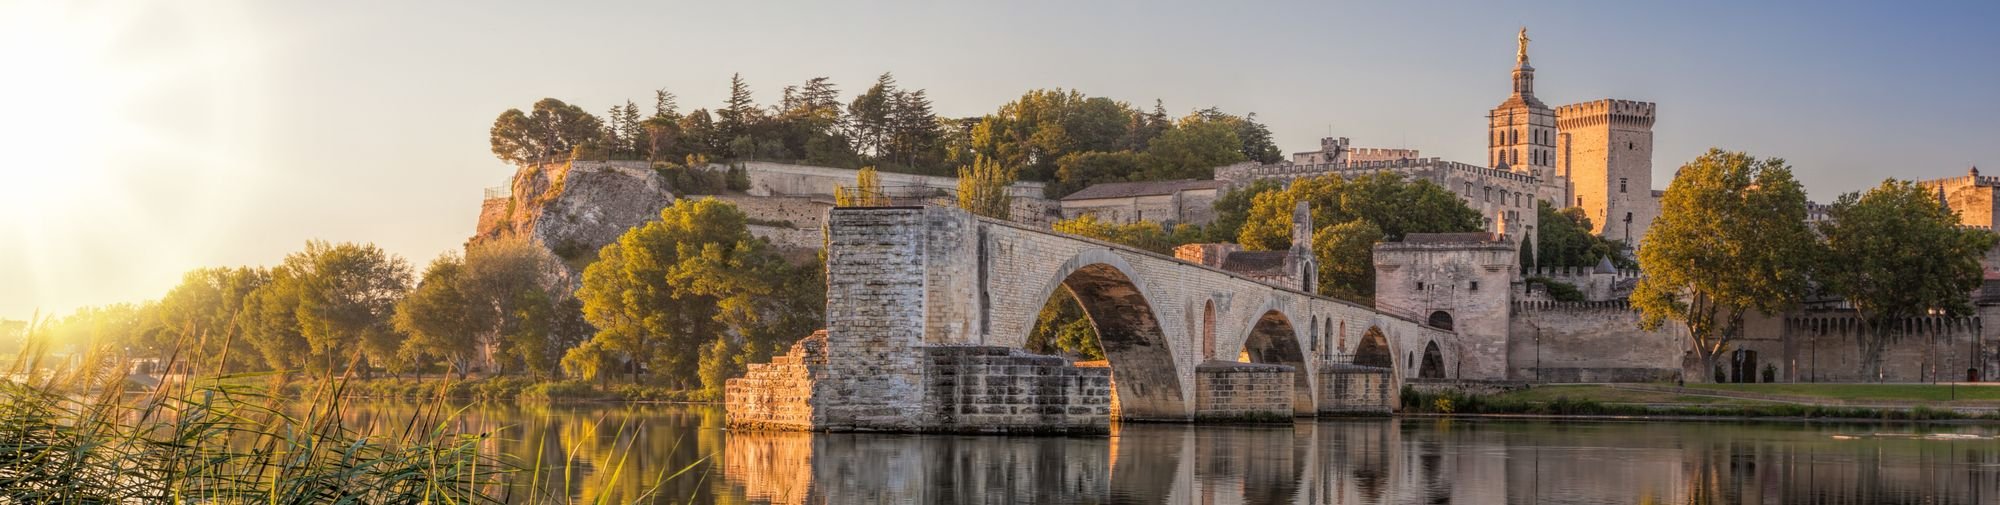 Avignon old bridge during sunset in Provence, France By Tomas Marek